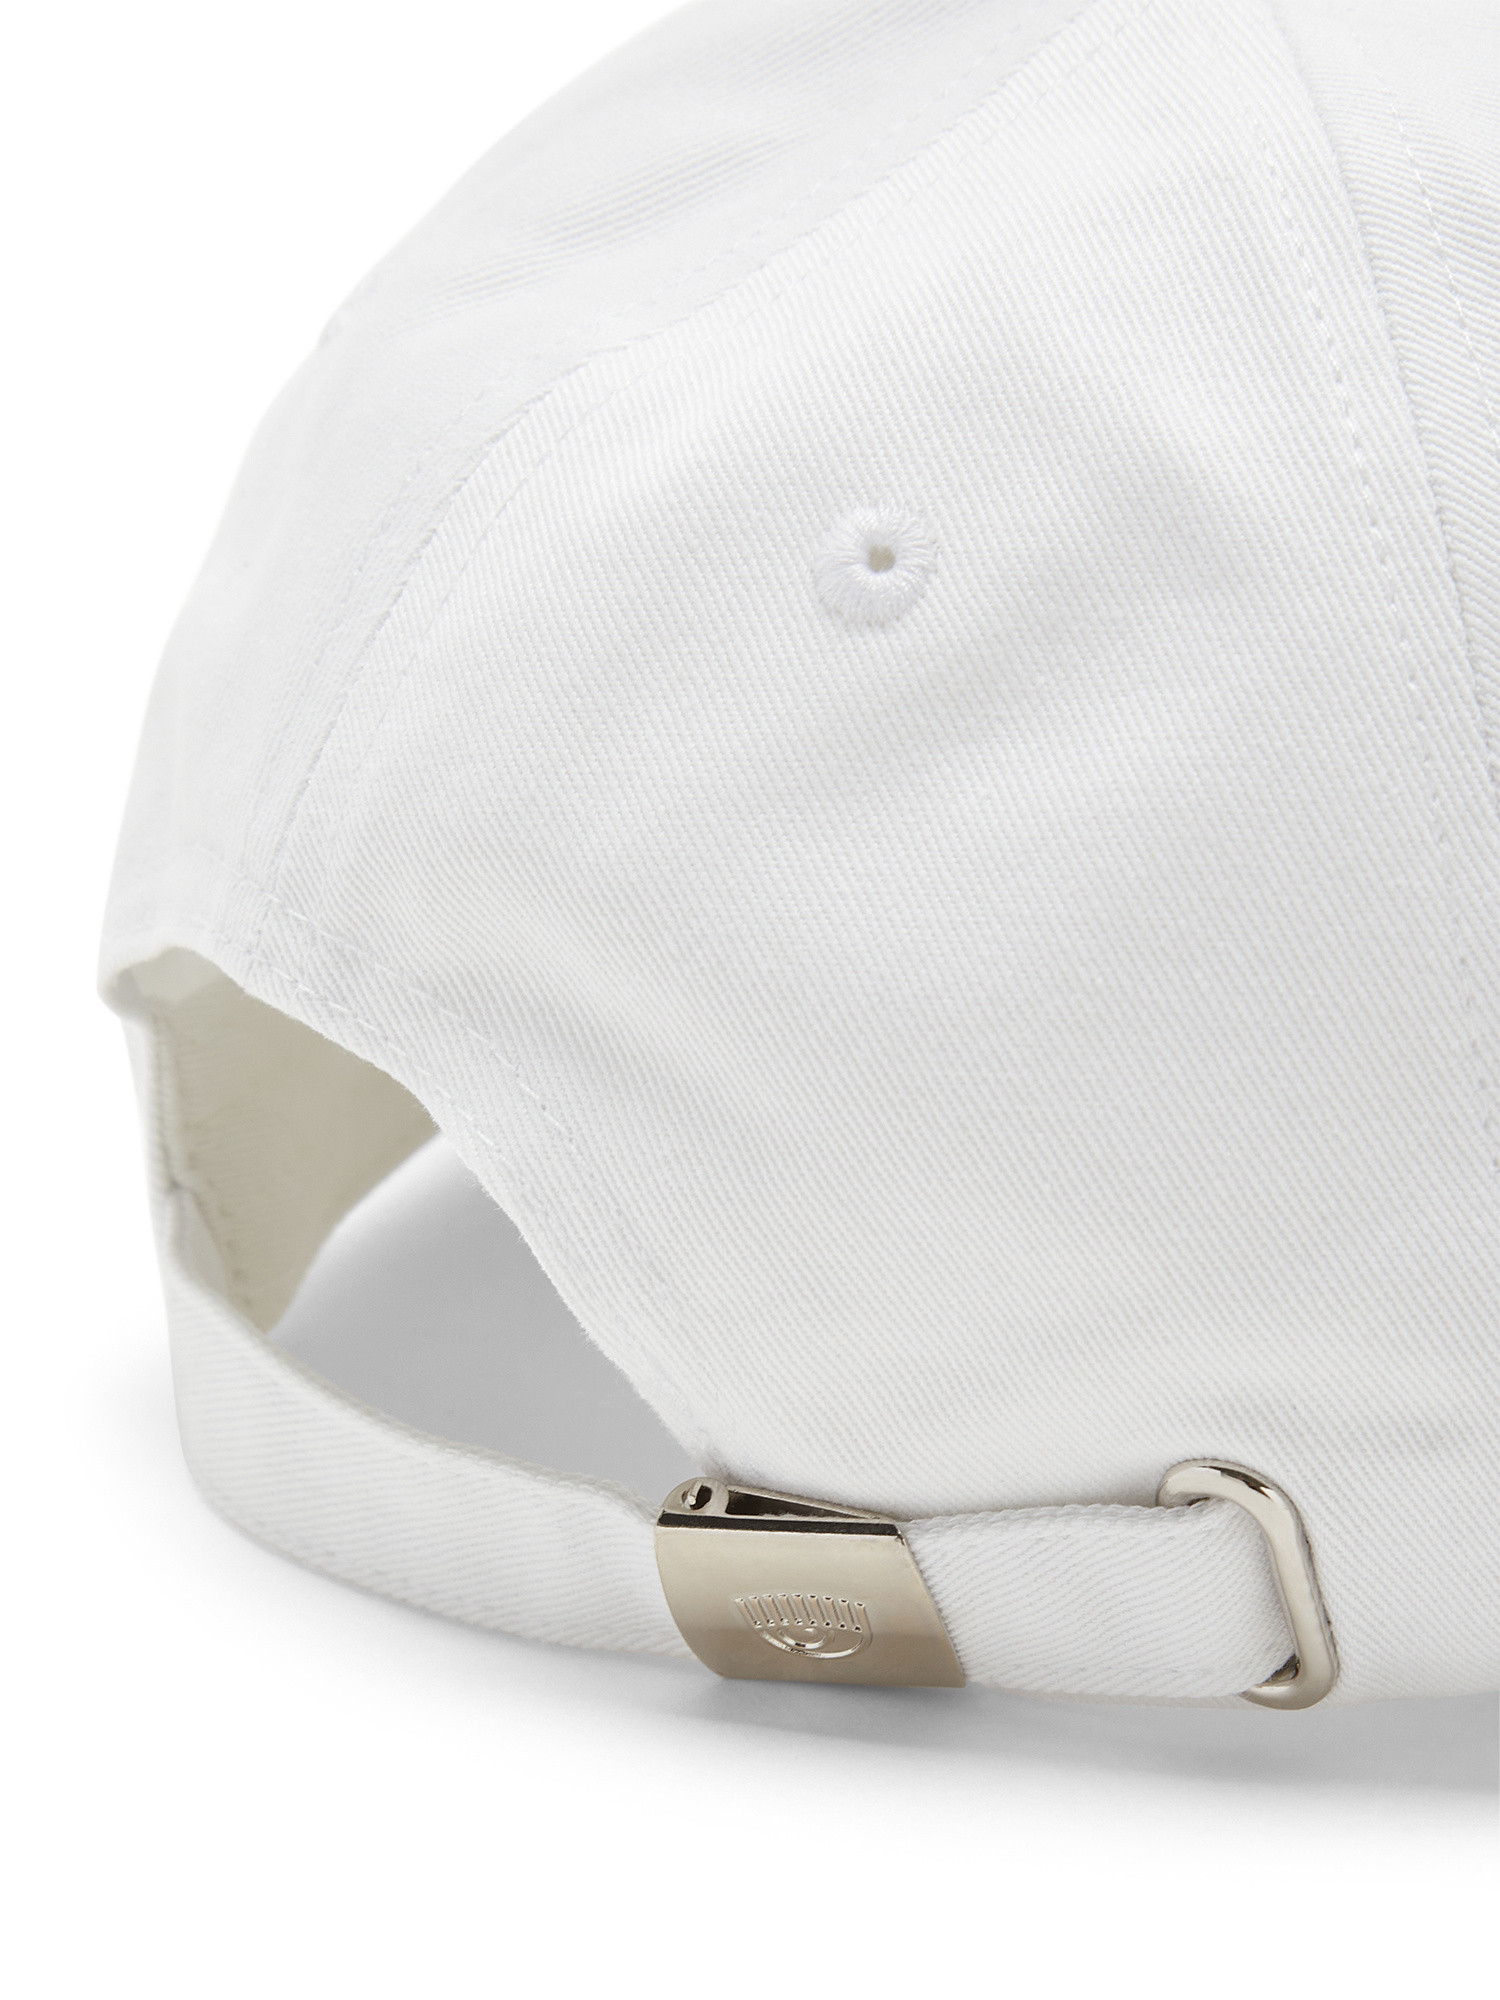 Chiara Ferragni - Eye Star baseball hat, White, large image number 1